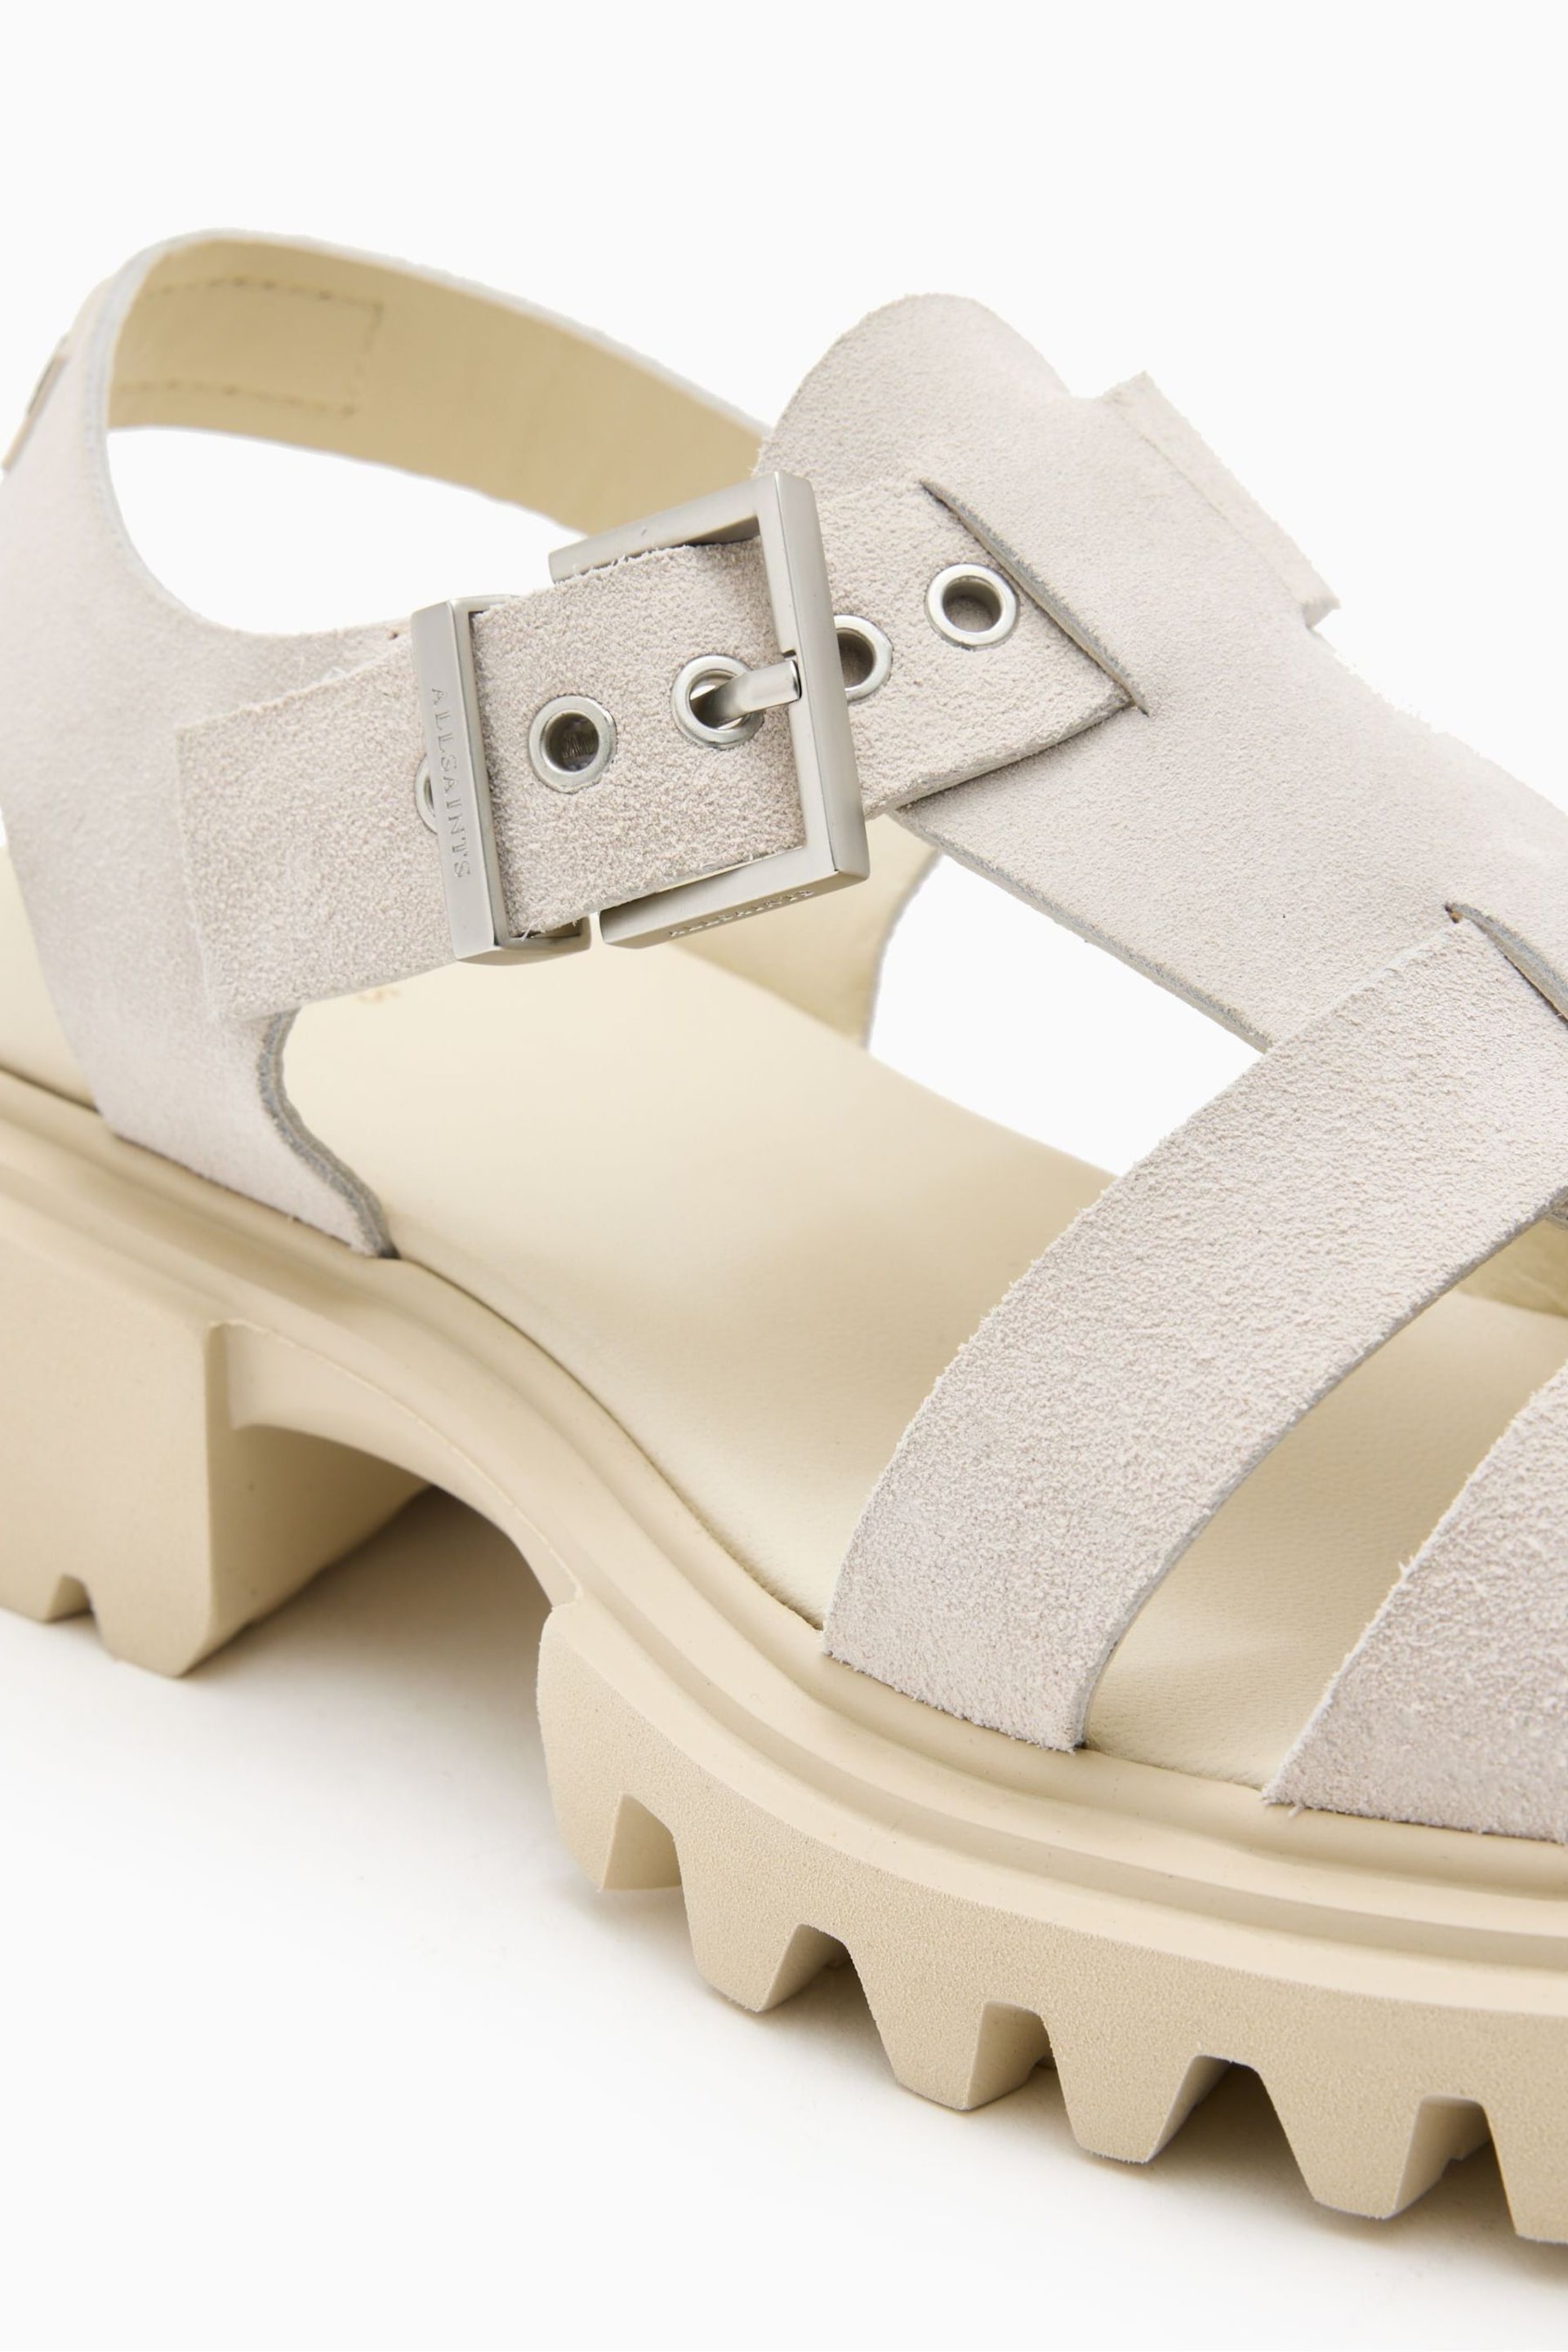 AllSaints White Nessa Sandals - Image 3 of 5